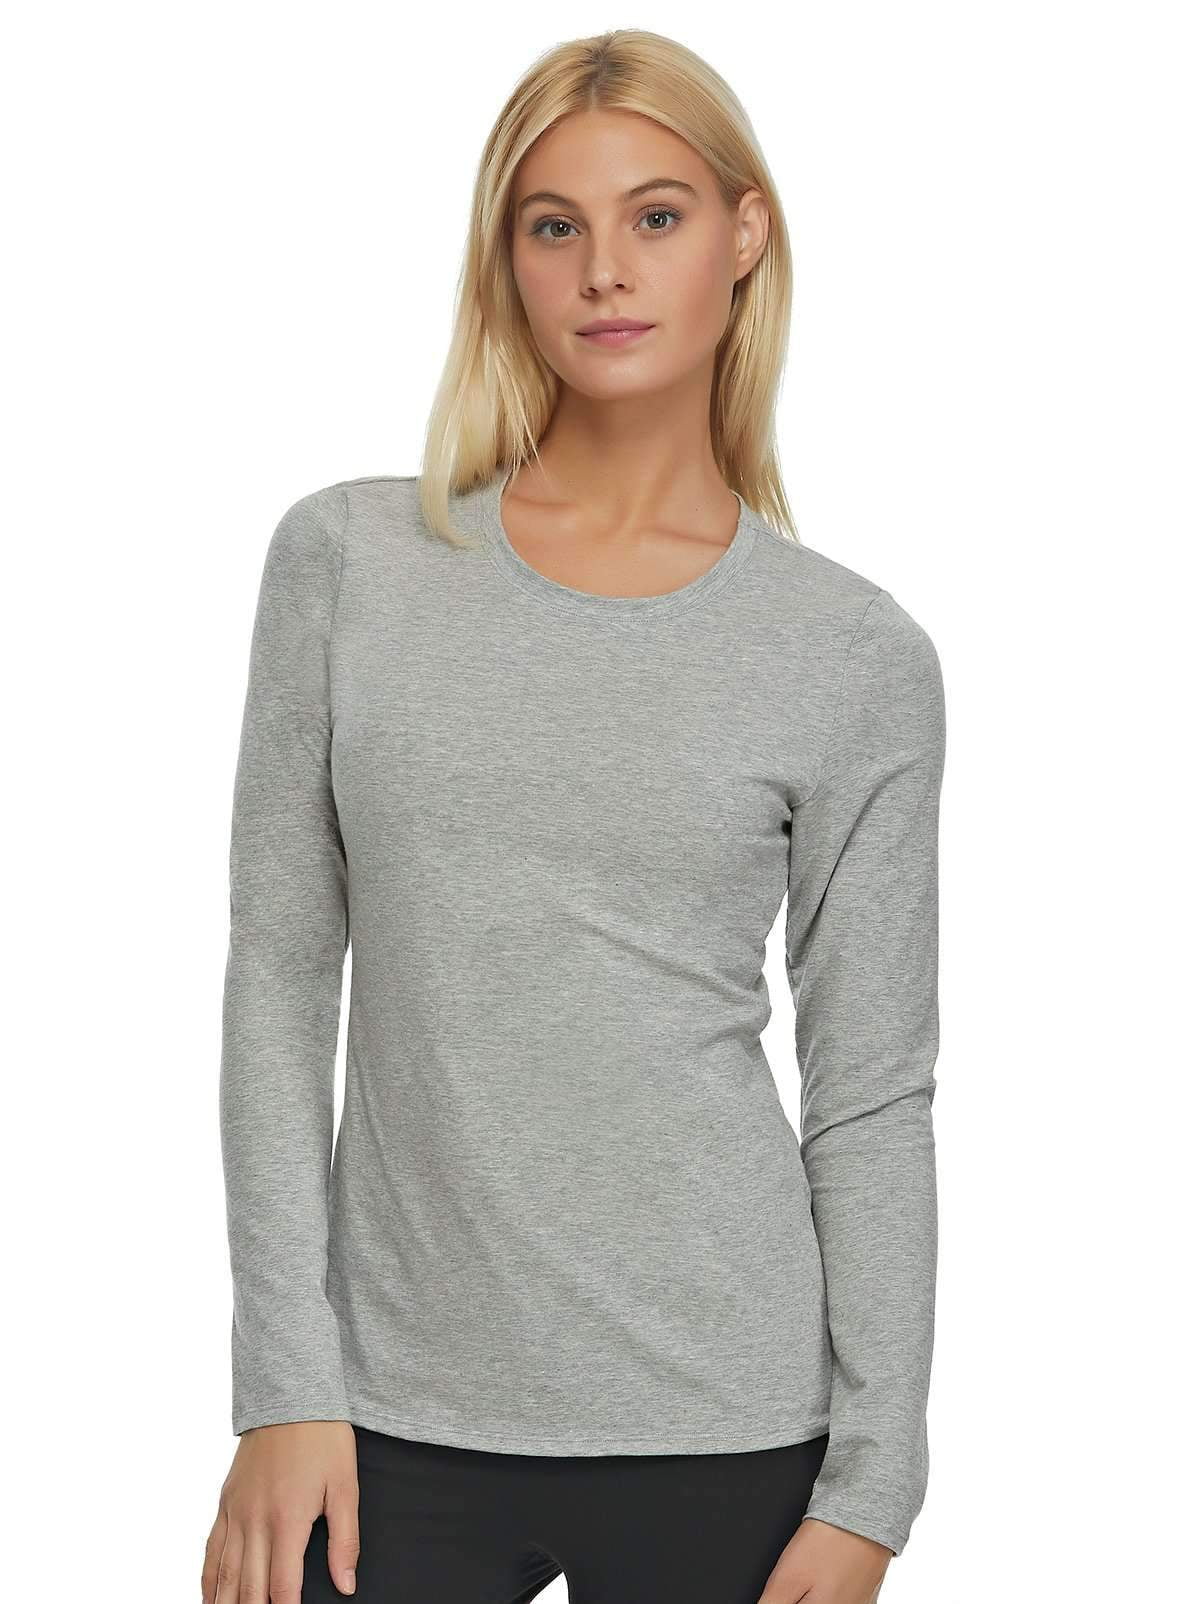 & Grey, Heather | Felina Modal Shirt Crew | Long (Medium Large) Neck Sleeve Cotton